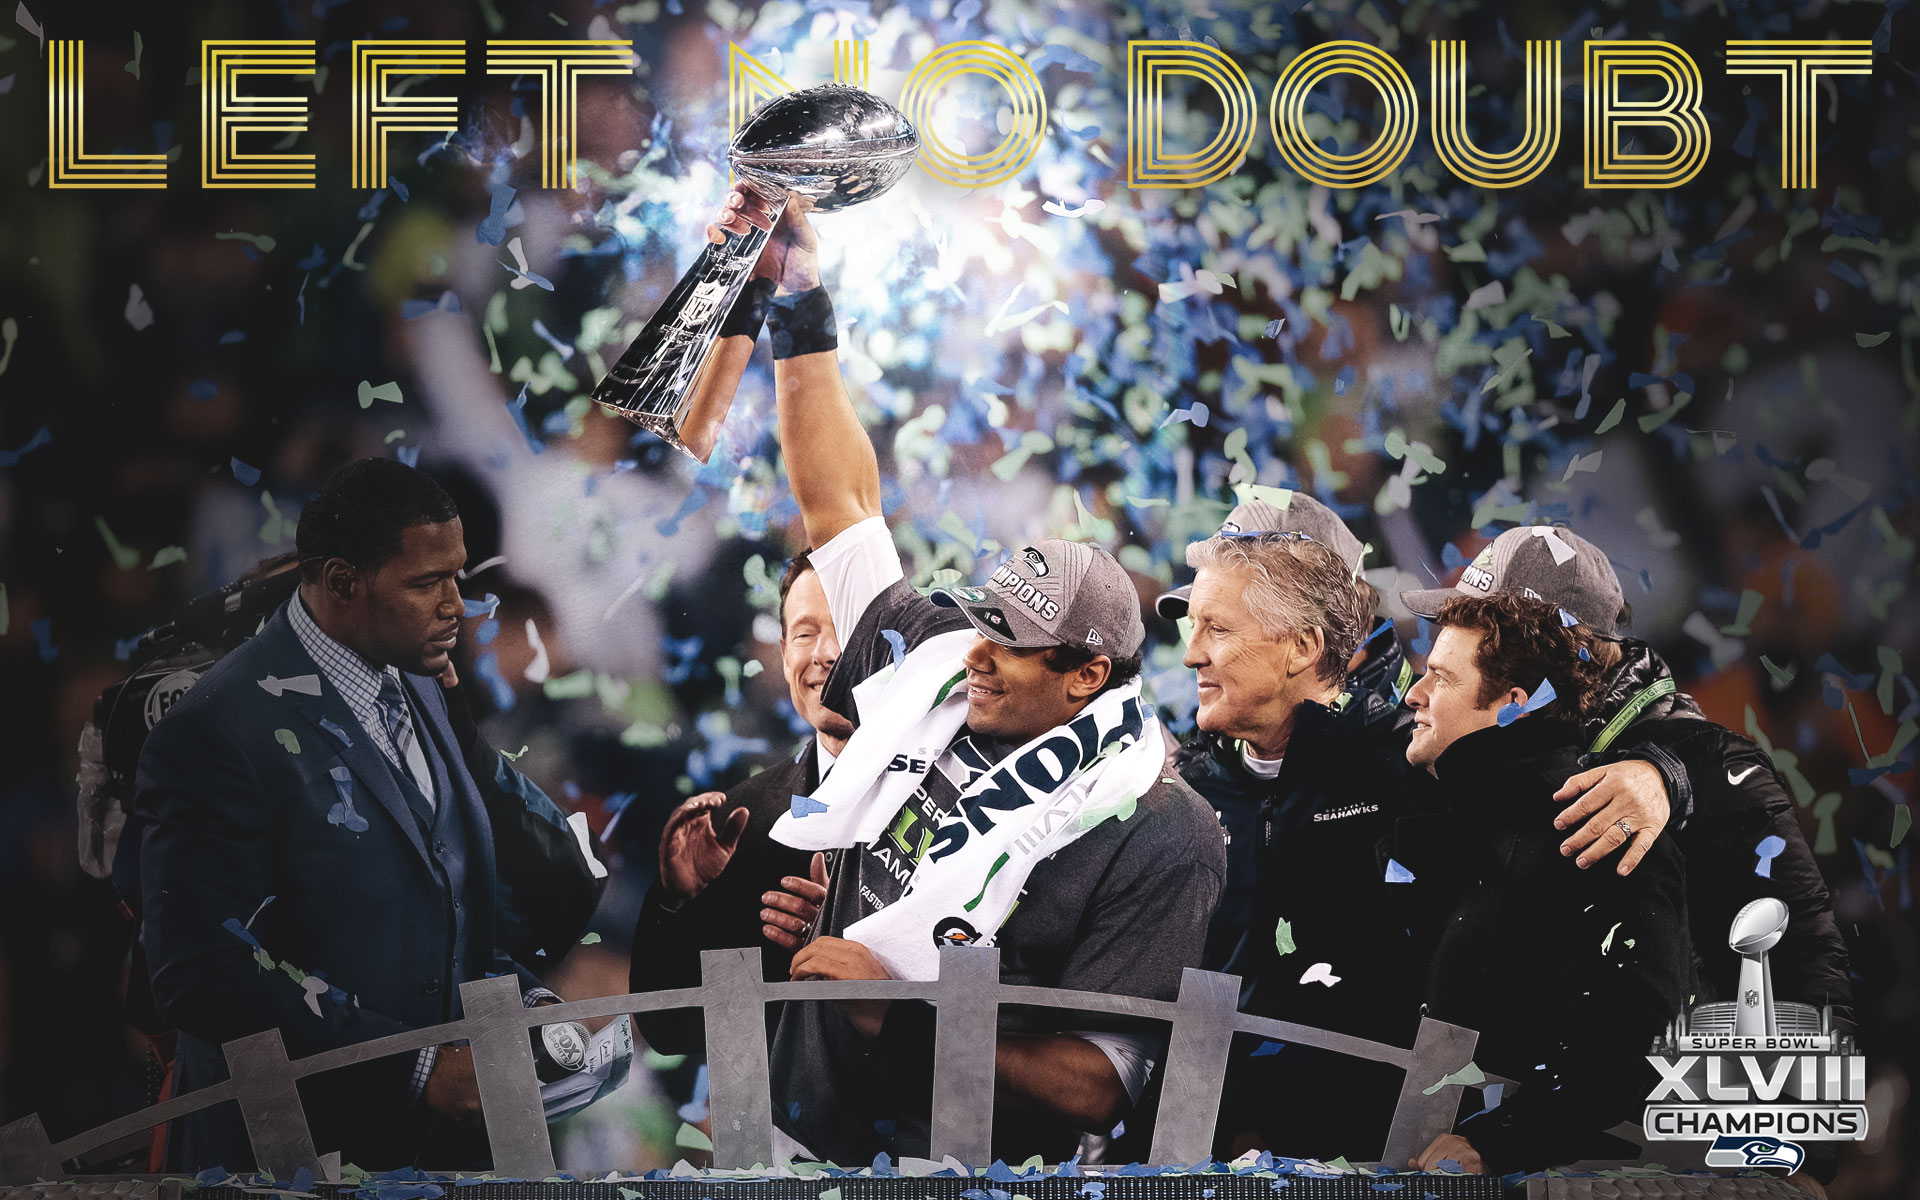 Sports Seattle Seahawks HD Wallpaper | Background Image